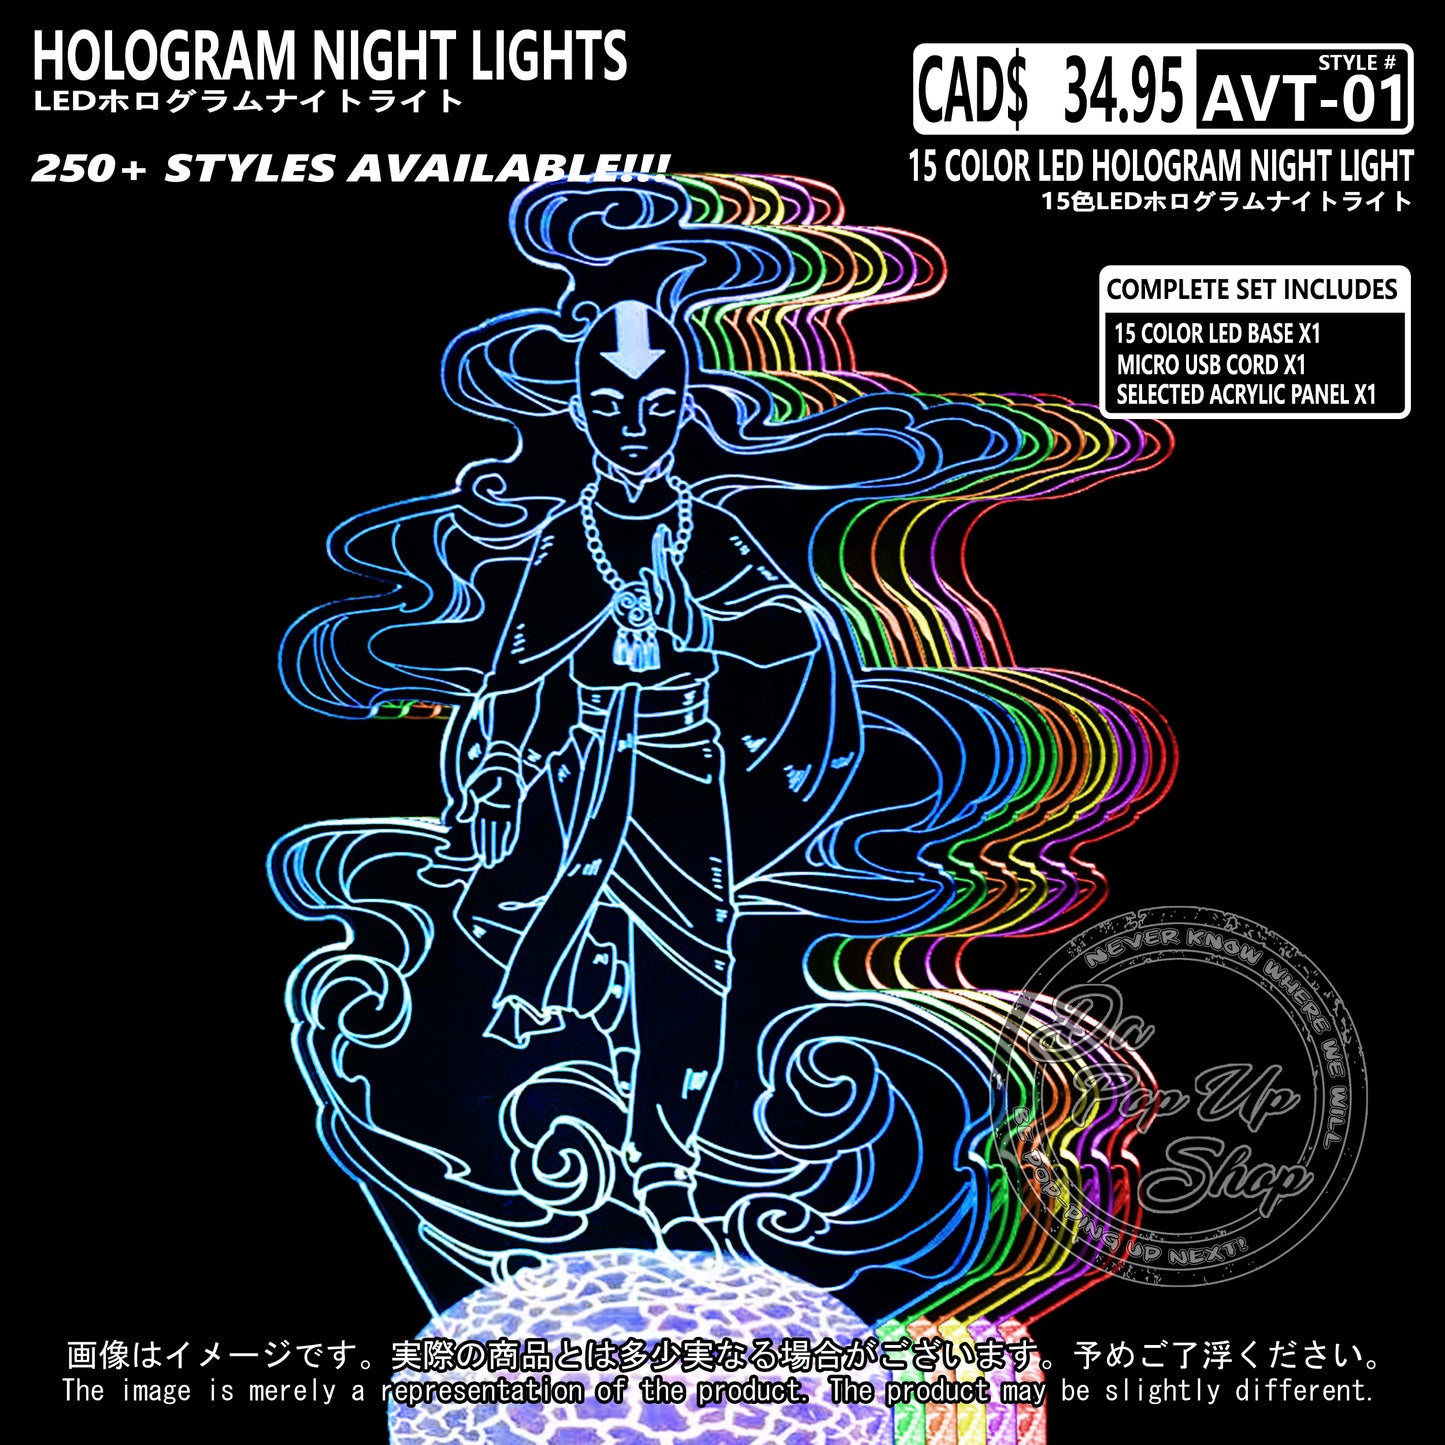 (AVA-01) Avatar: The Last Airbender Anime Hologram LED Night Light